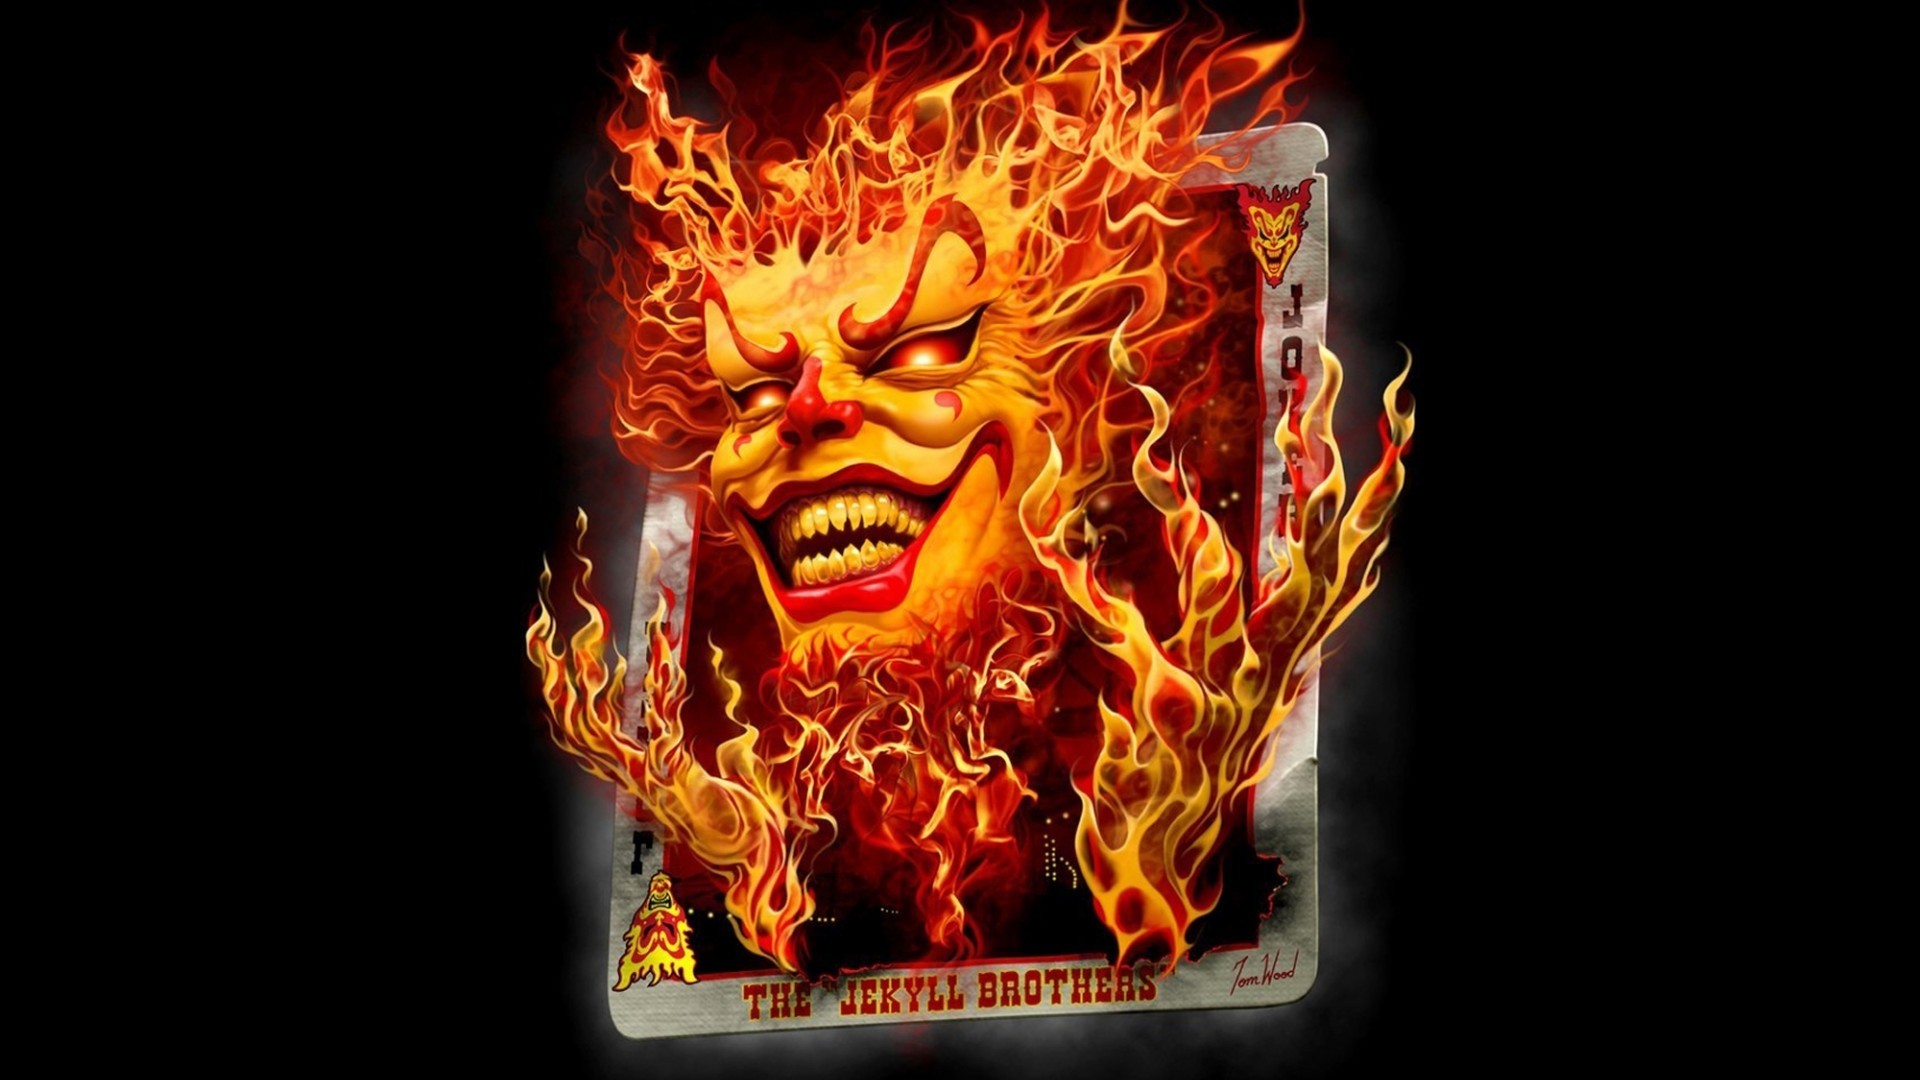 Digital Art Black Background Playing Cards Fire Joker Smiling Devils Red Eyes Juggalo 1920x1080